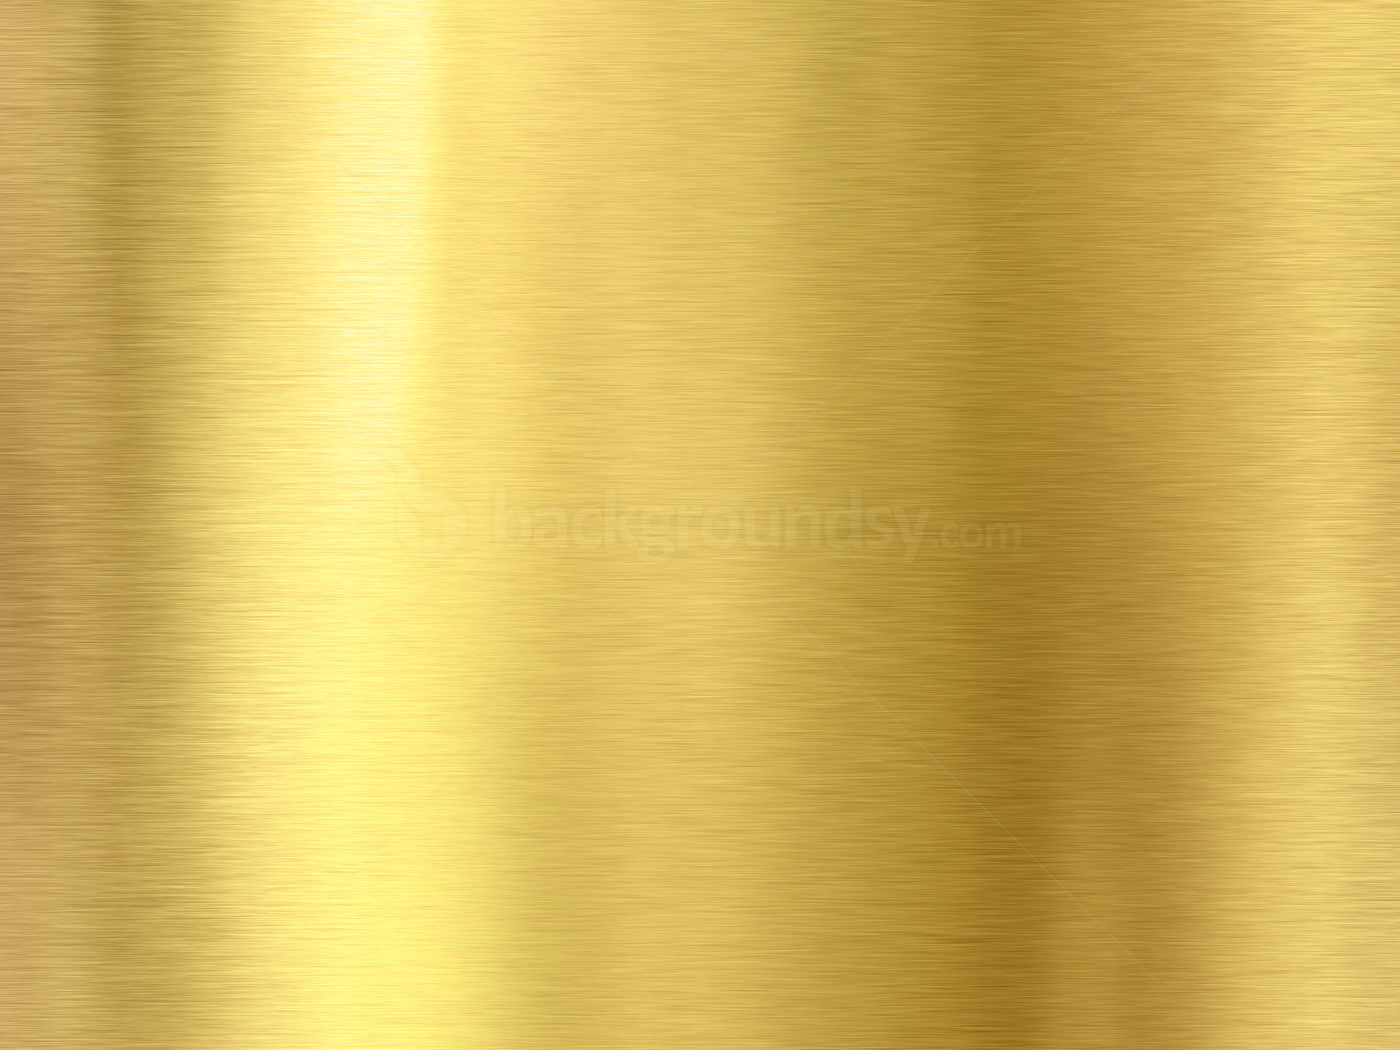 Gold Metal Texture image